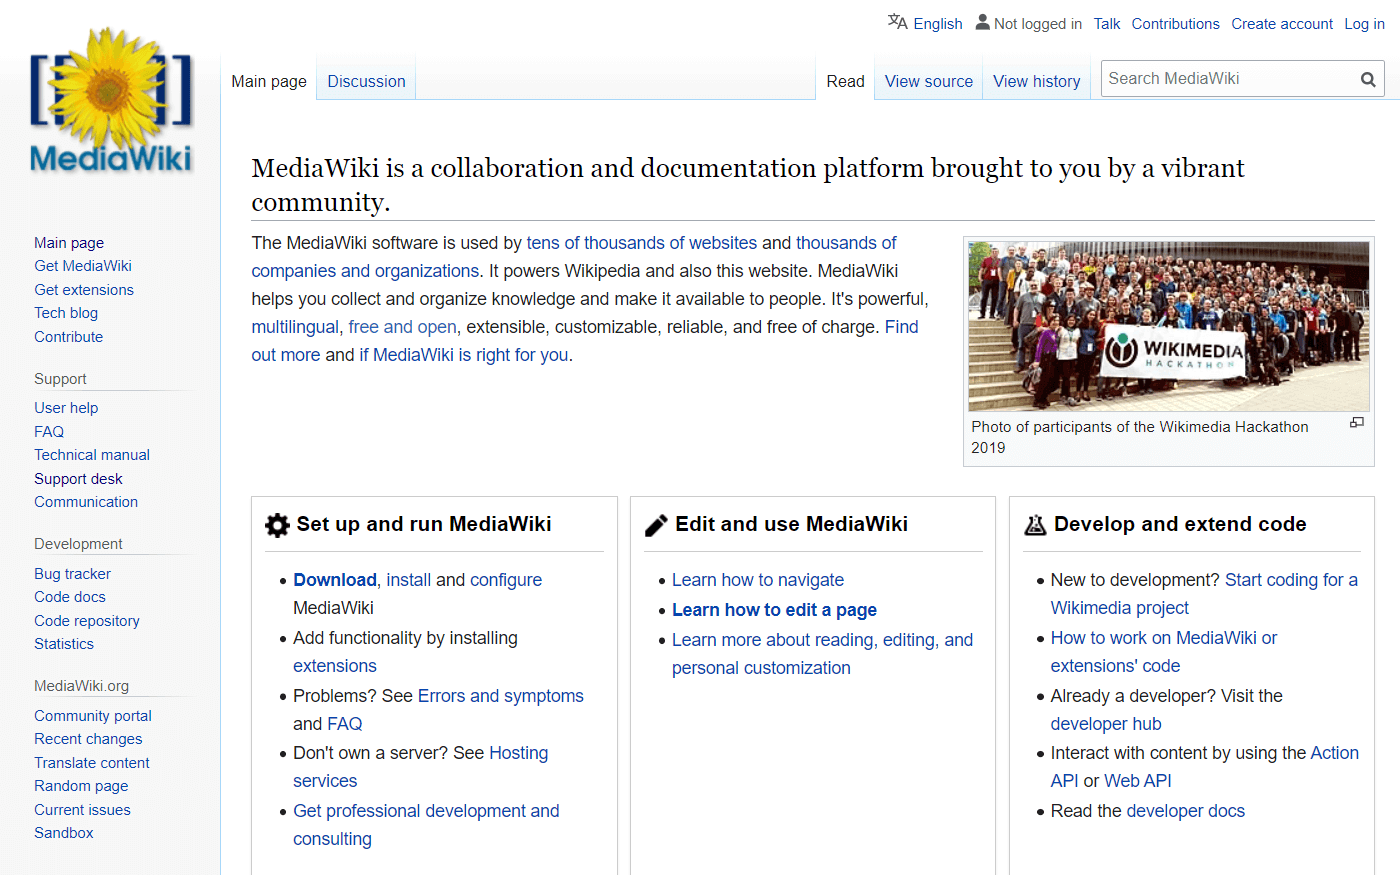 Public wiki software MediaWiki